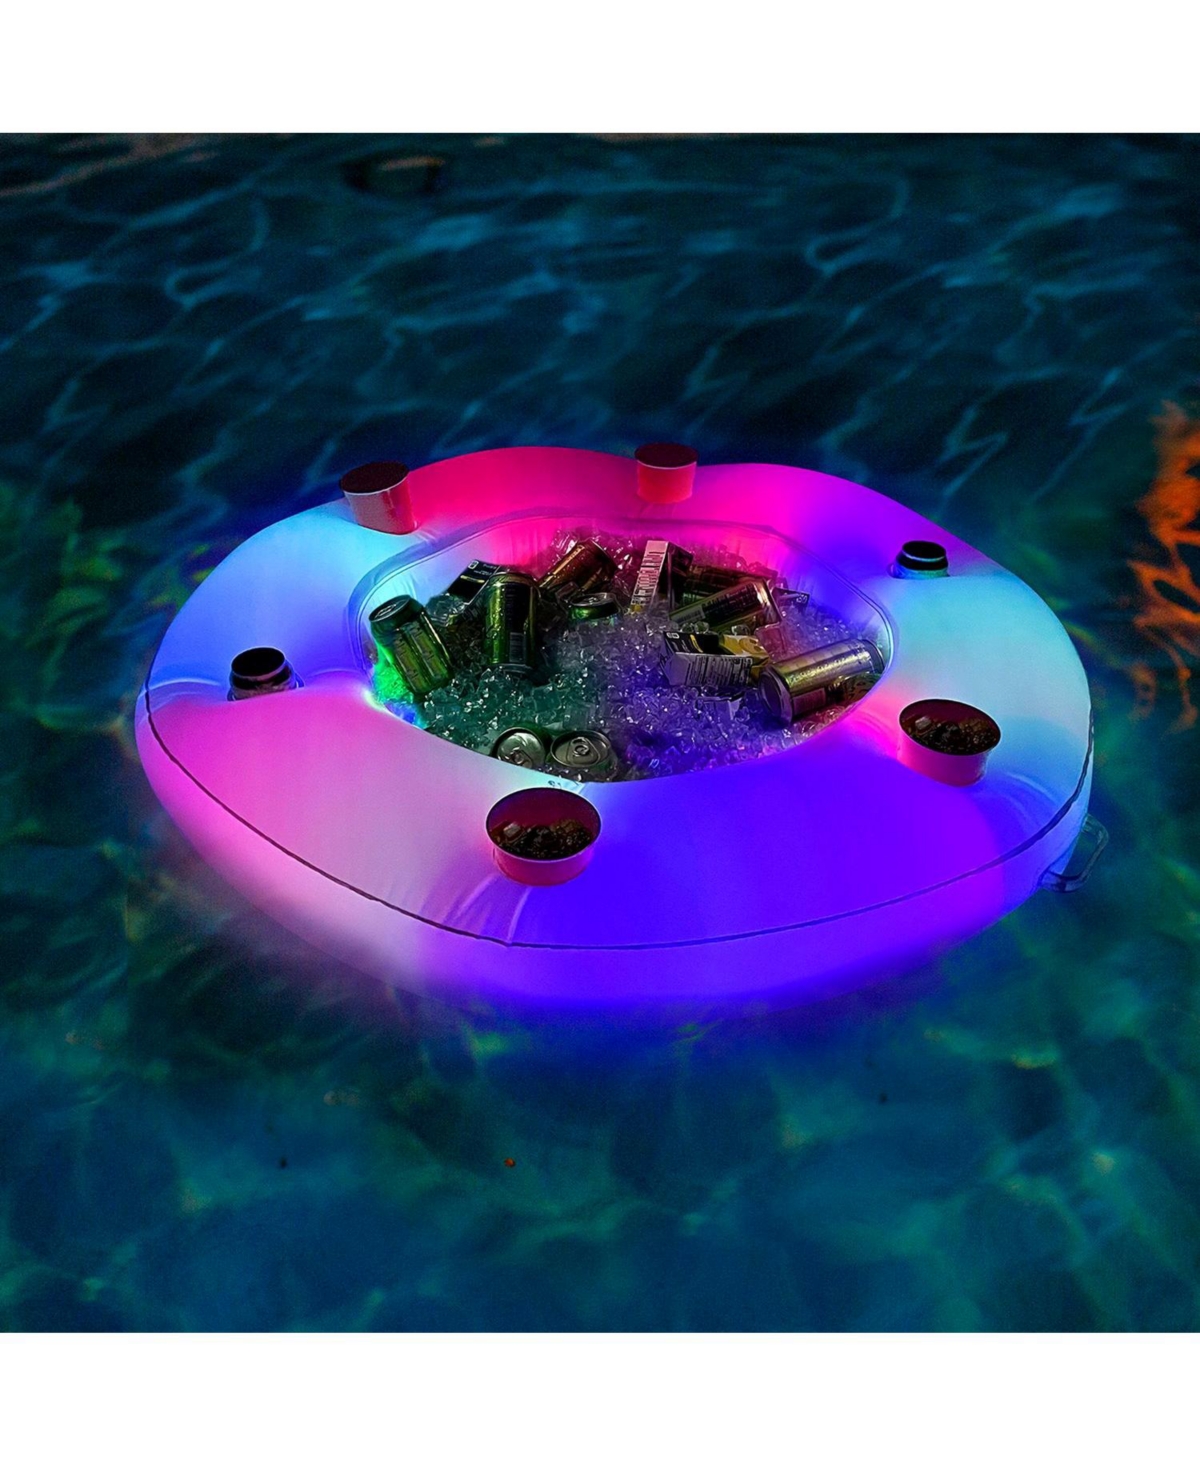 Poolcandy Illuminated Led Inflatable Floating Bar 7 Piece Set In White With Led Lights